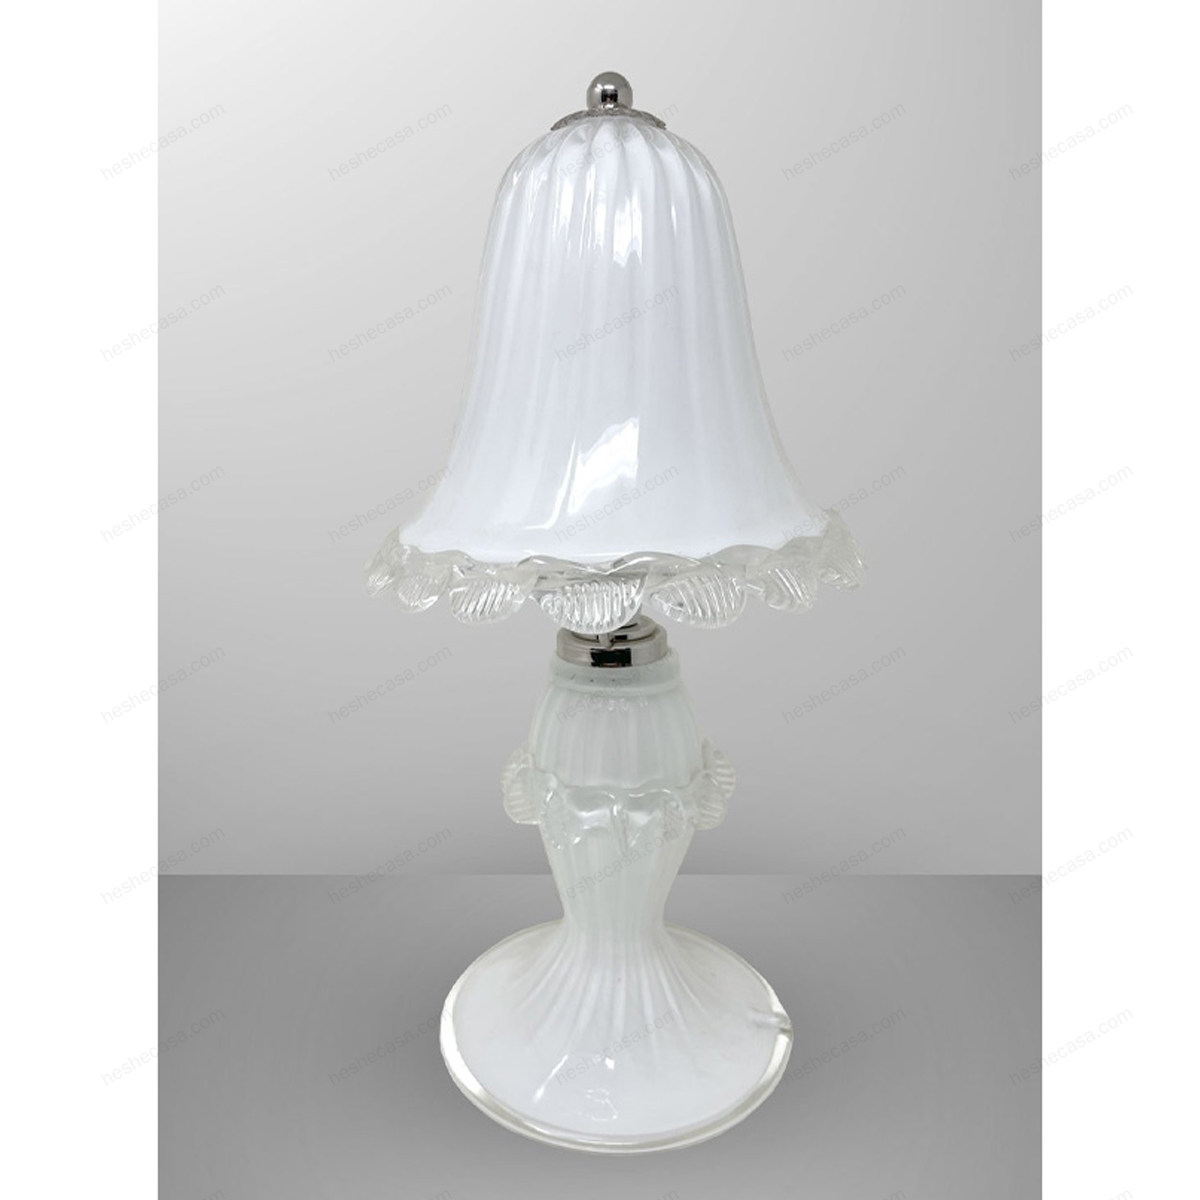 Lamp In Blown Murano Glass台灯